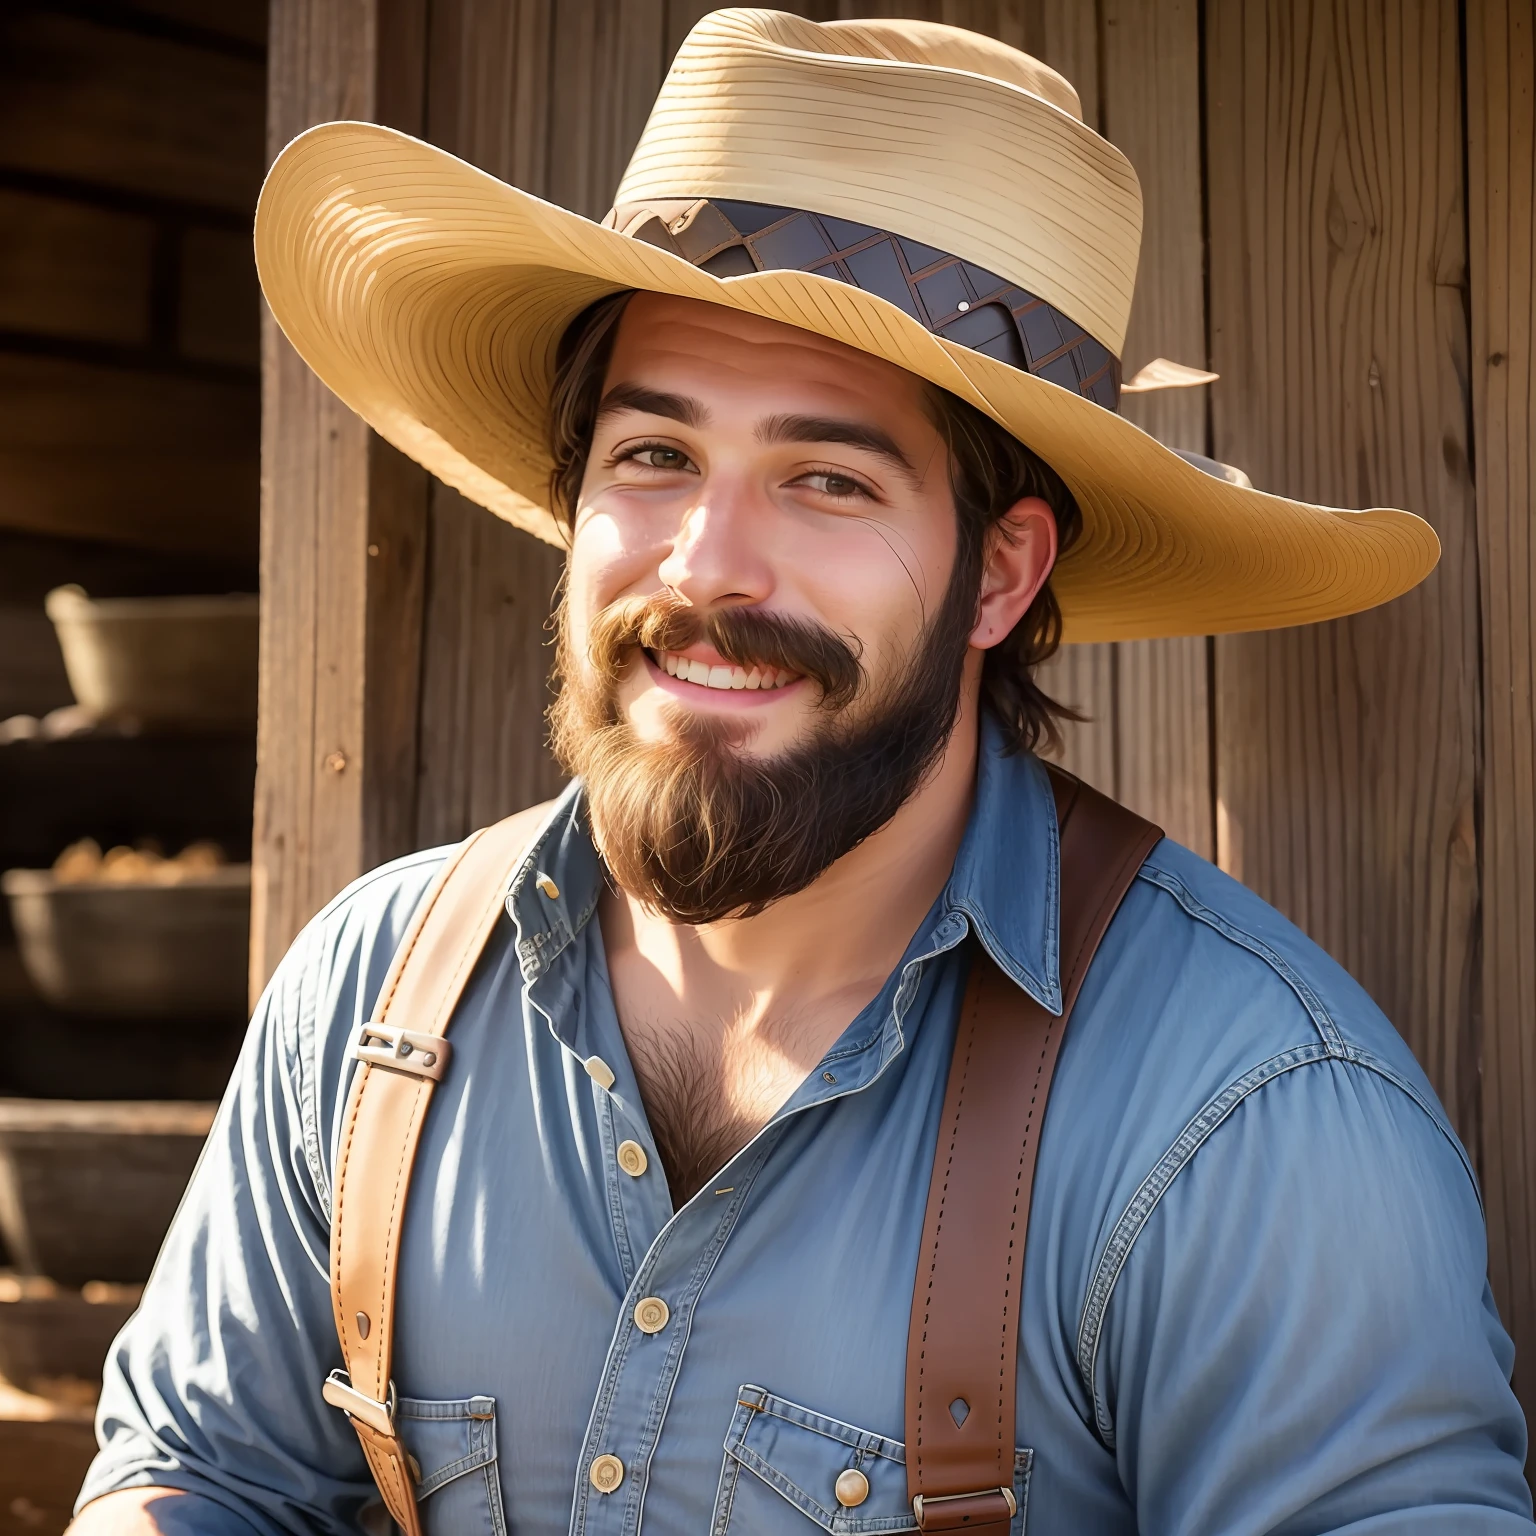 A 사실적인 portrait of a young man in a rancher clothes', 황갈색 셔츠, 목장주 모자를 쓴 멜빵과 청바지, 초현실적, 사실적인, 푹신한 자연스러운 머리카락, 자연스러운 얼굴, 수염, 짧은 구레나룻, , 매우 상세한. 행복하다